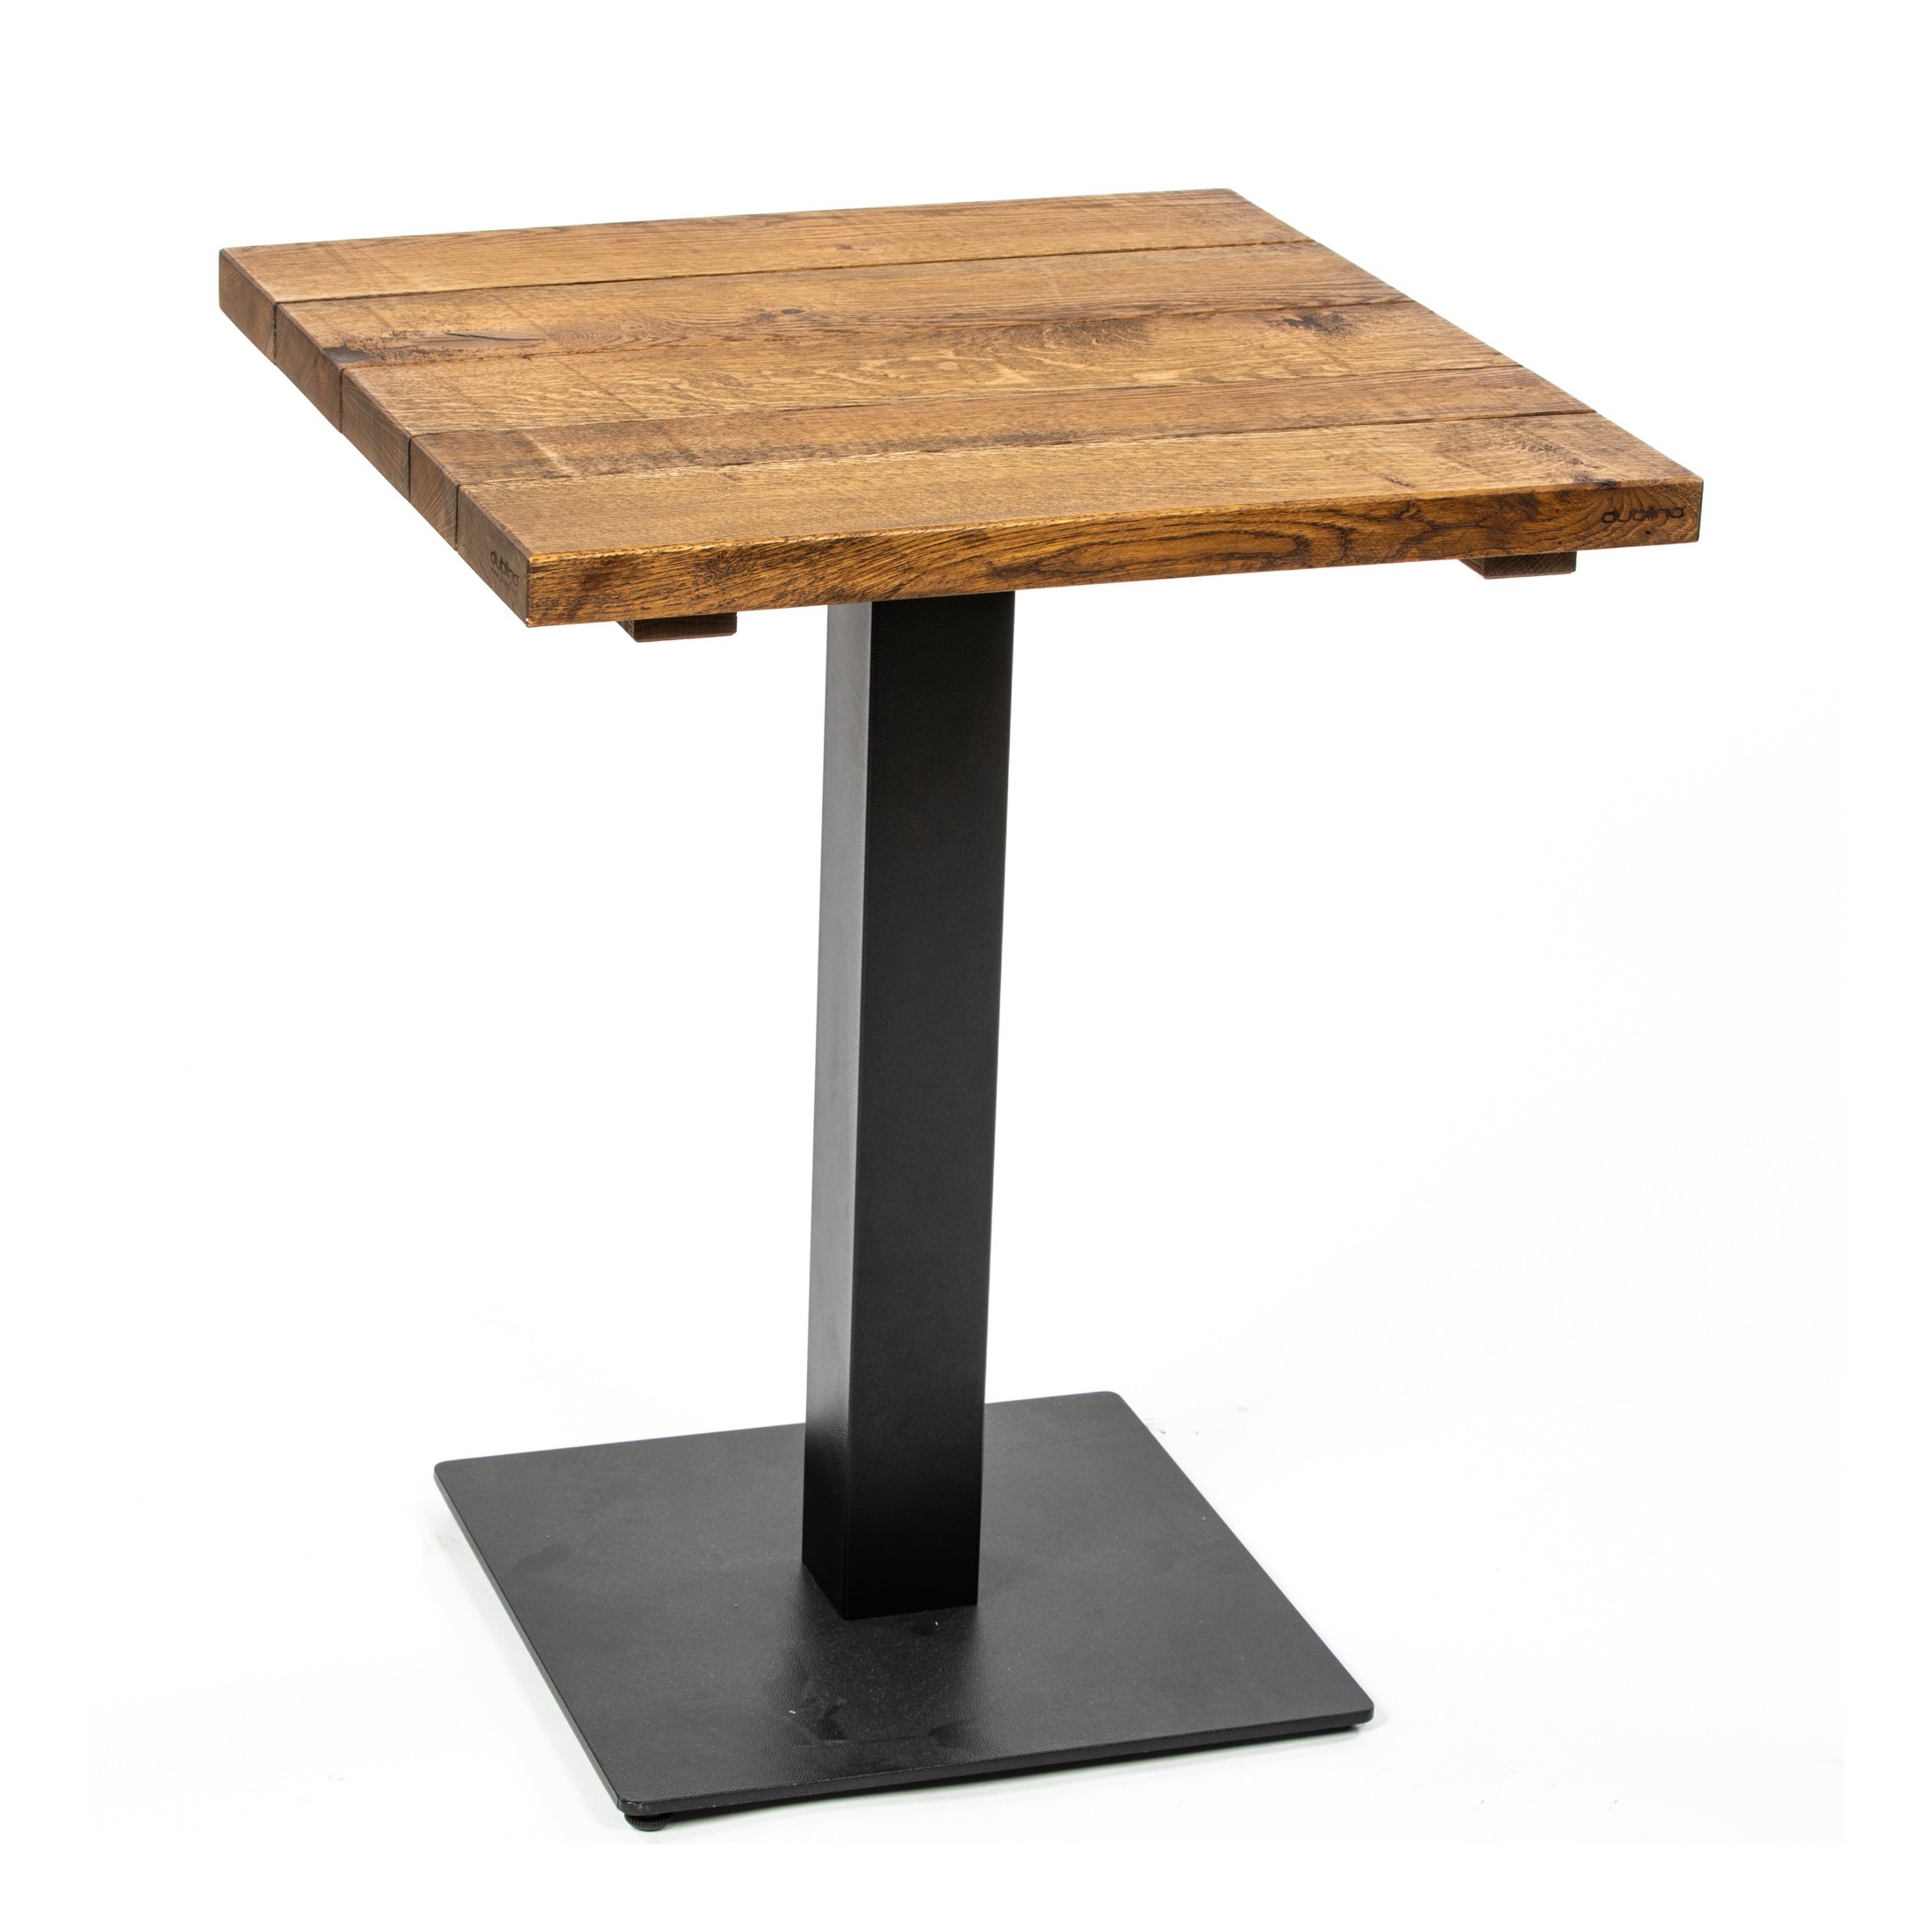 Massivholz Tischplatte RUSTIKAL OILED, Eichenlatten geölt, viele Formate, Stärke 30 mm-160 x 80 cm